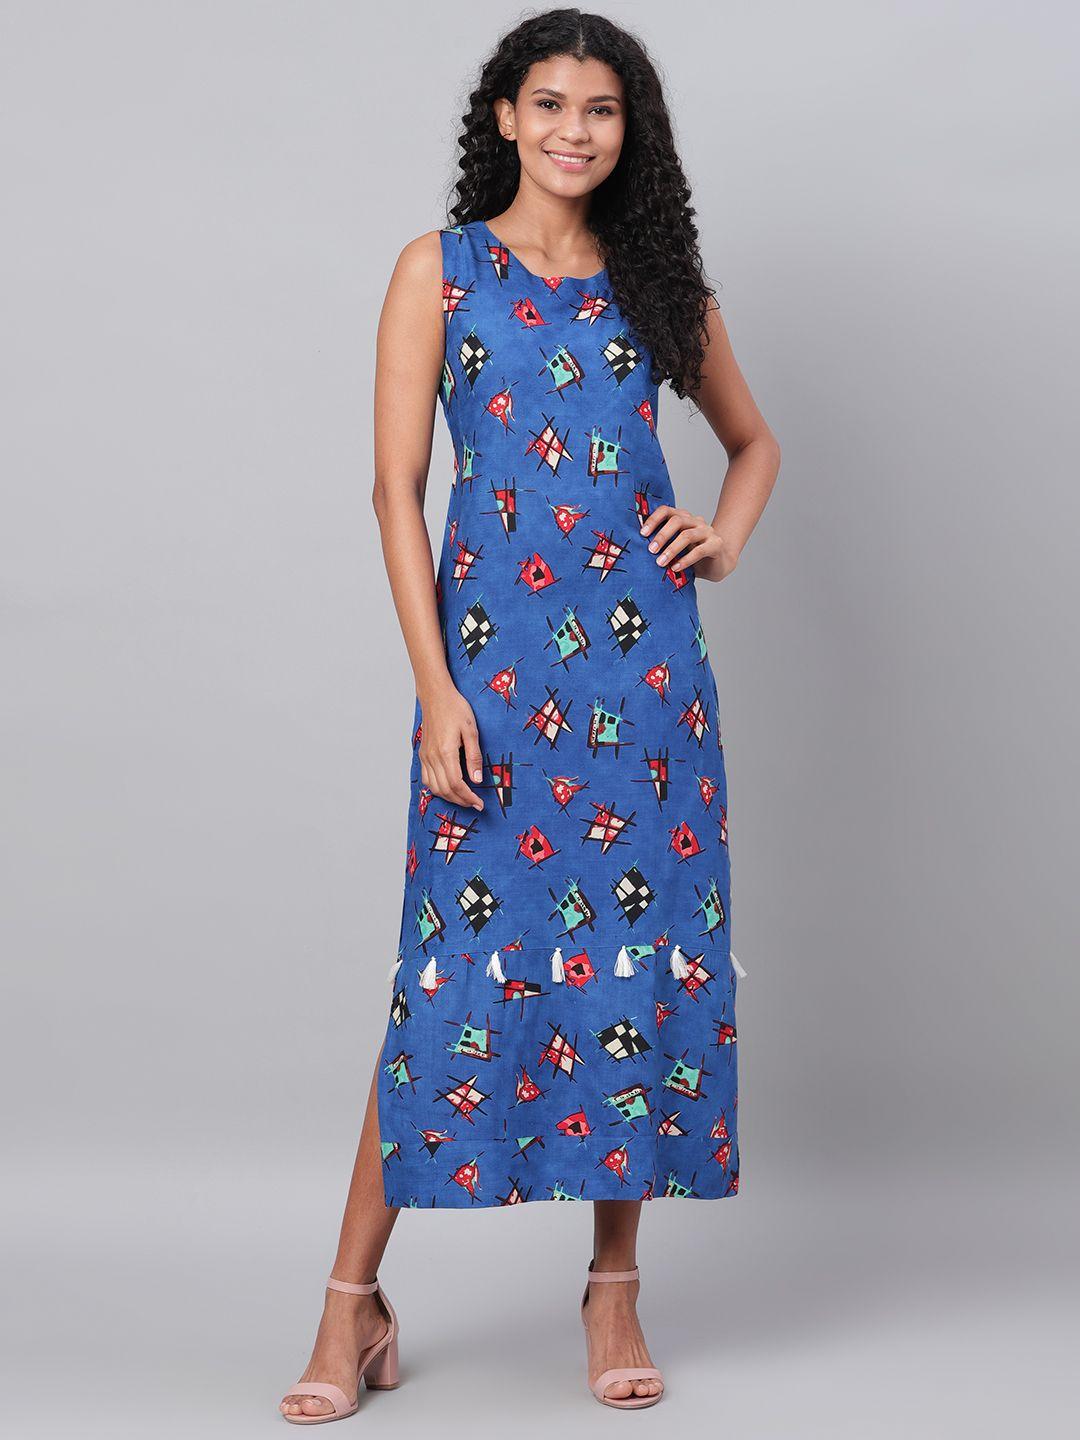 myshka women blue & red printed a-line dress